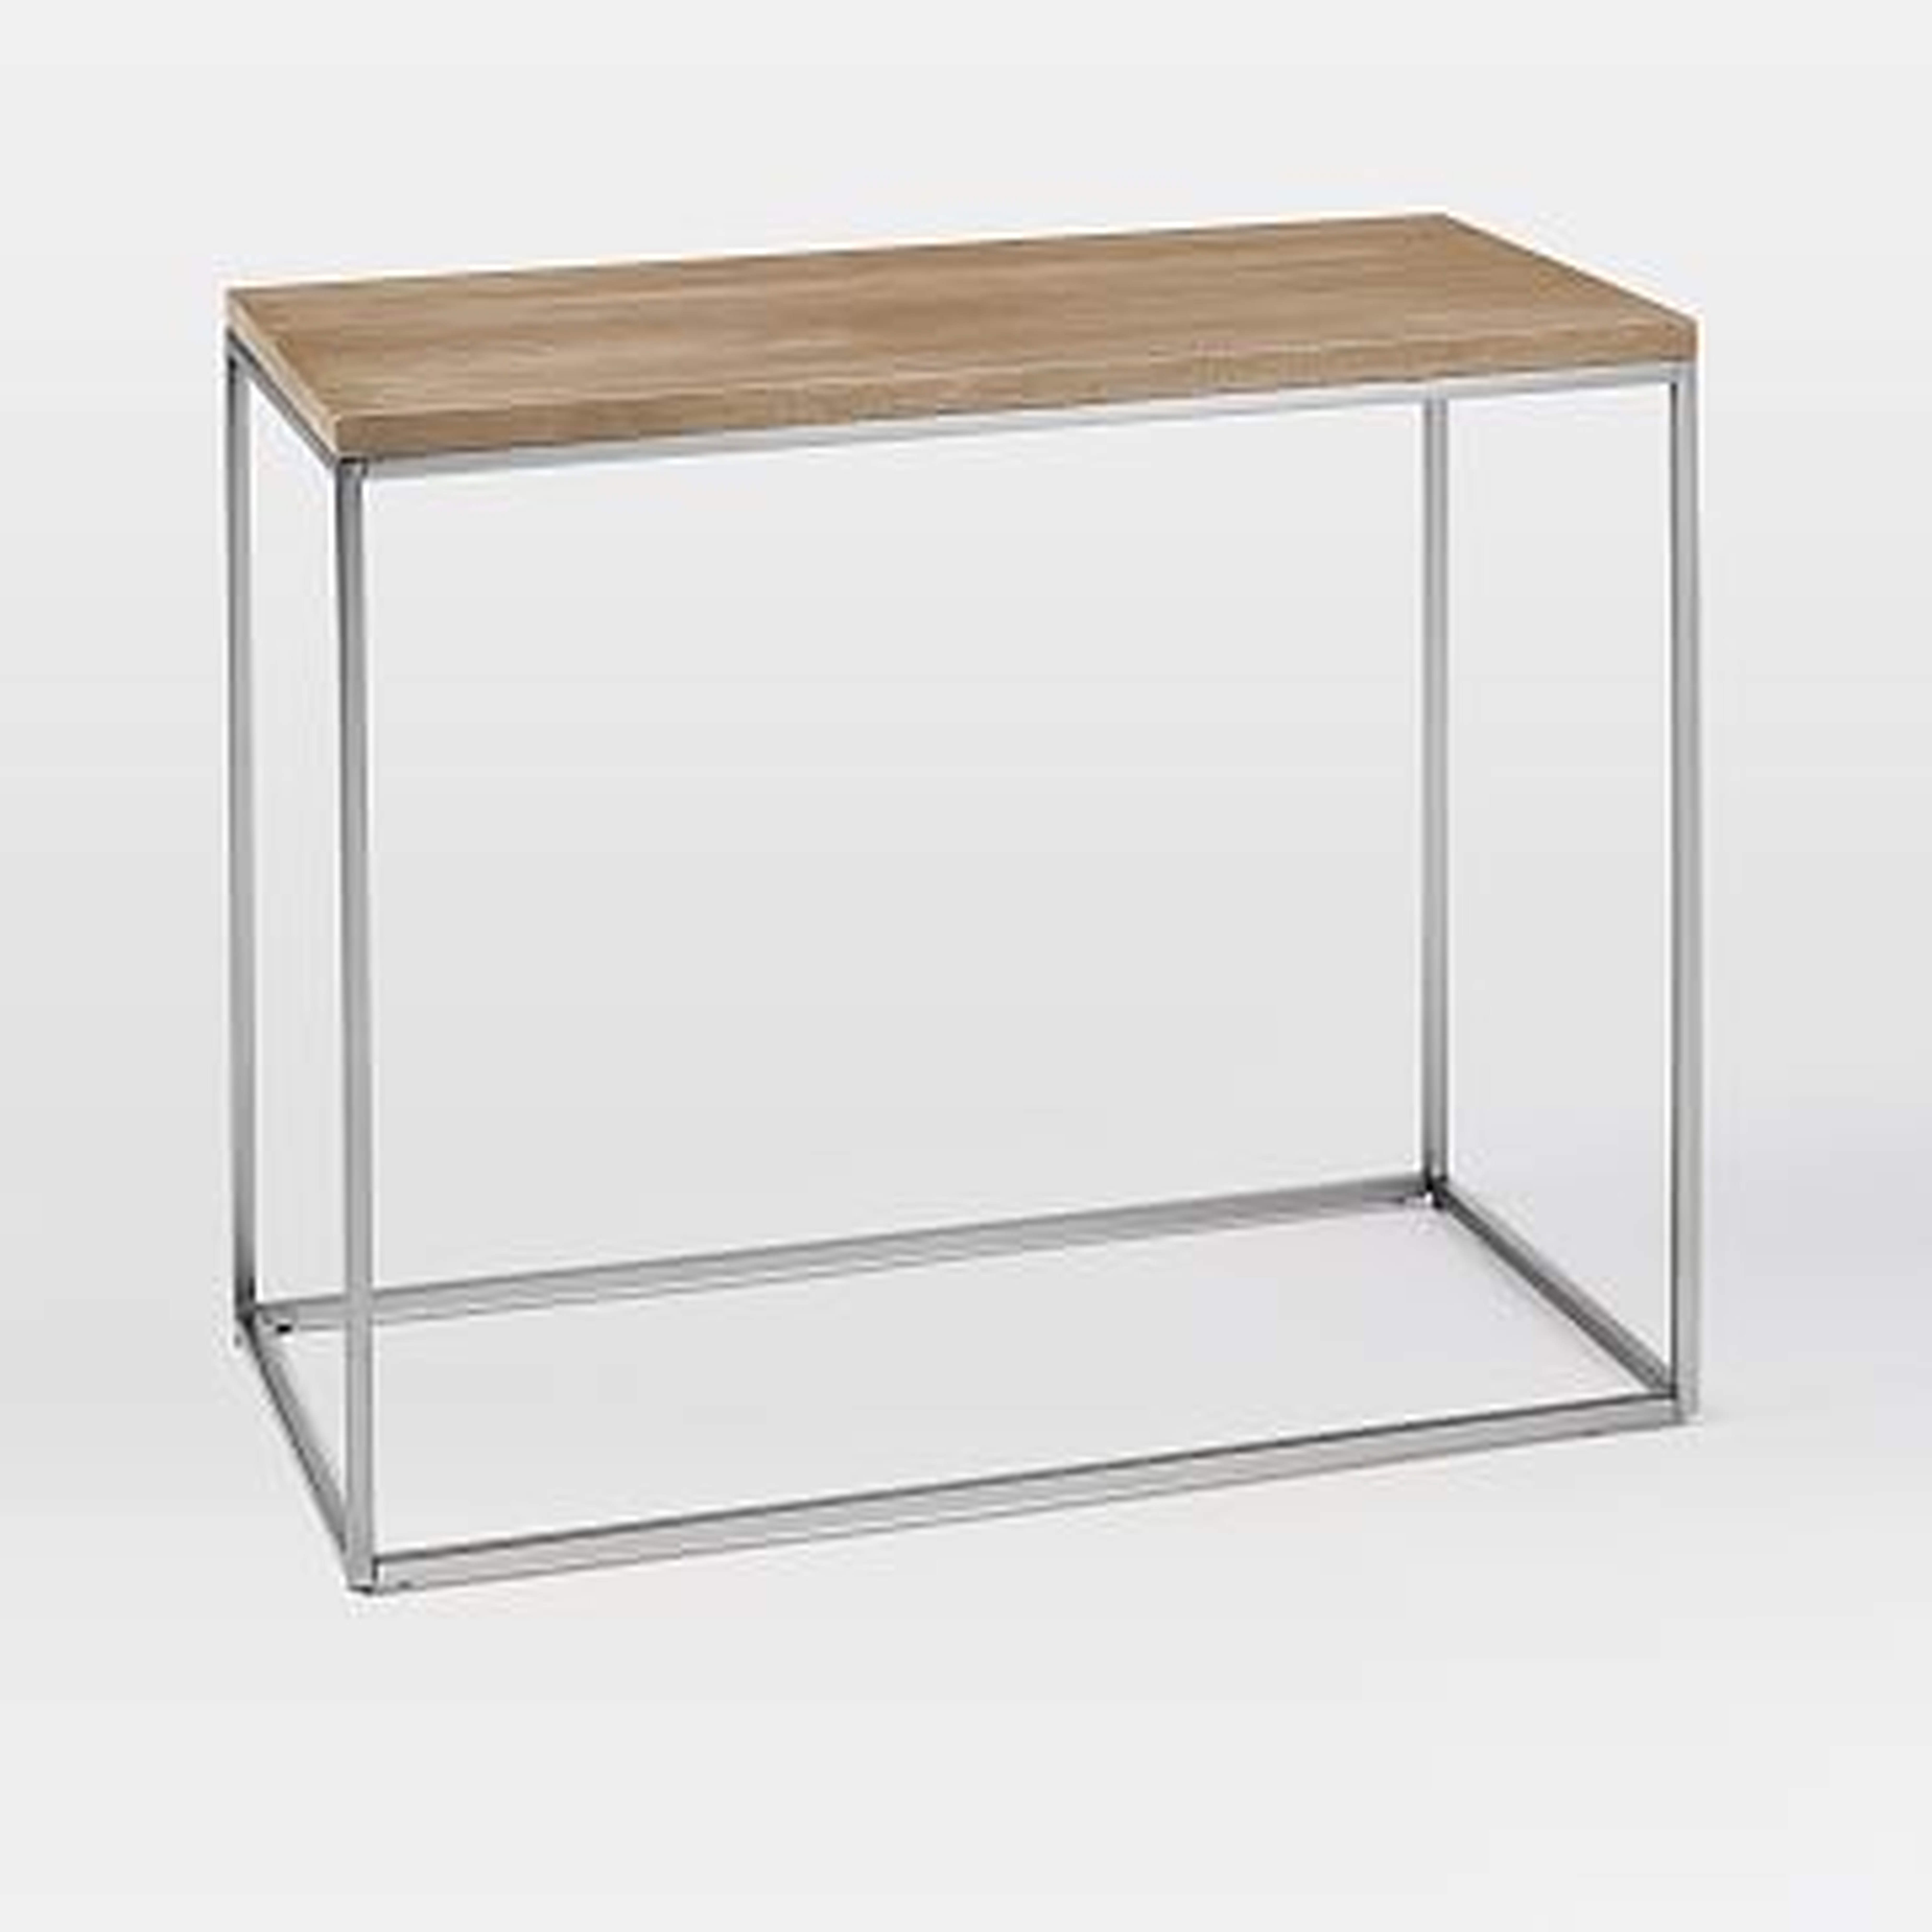 Streamline Side Table, Whitewashed Mango Wood/Stainless Steel - West Elm